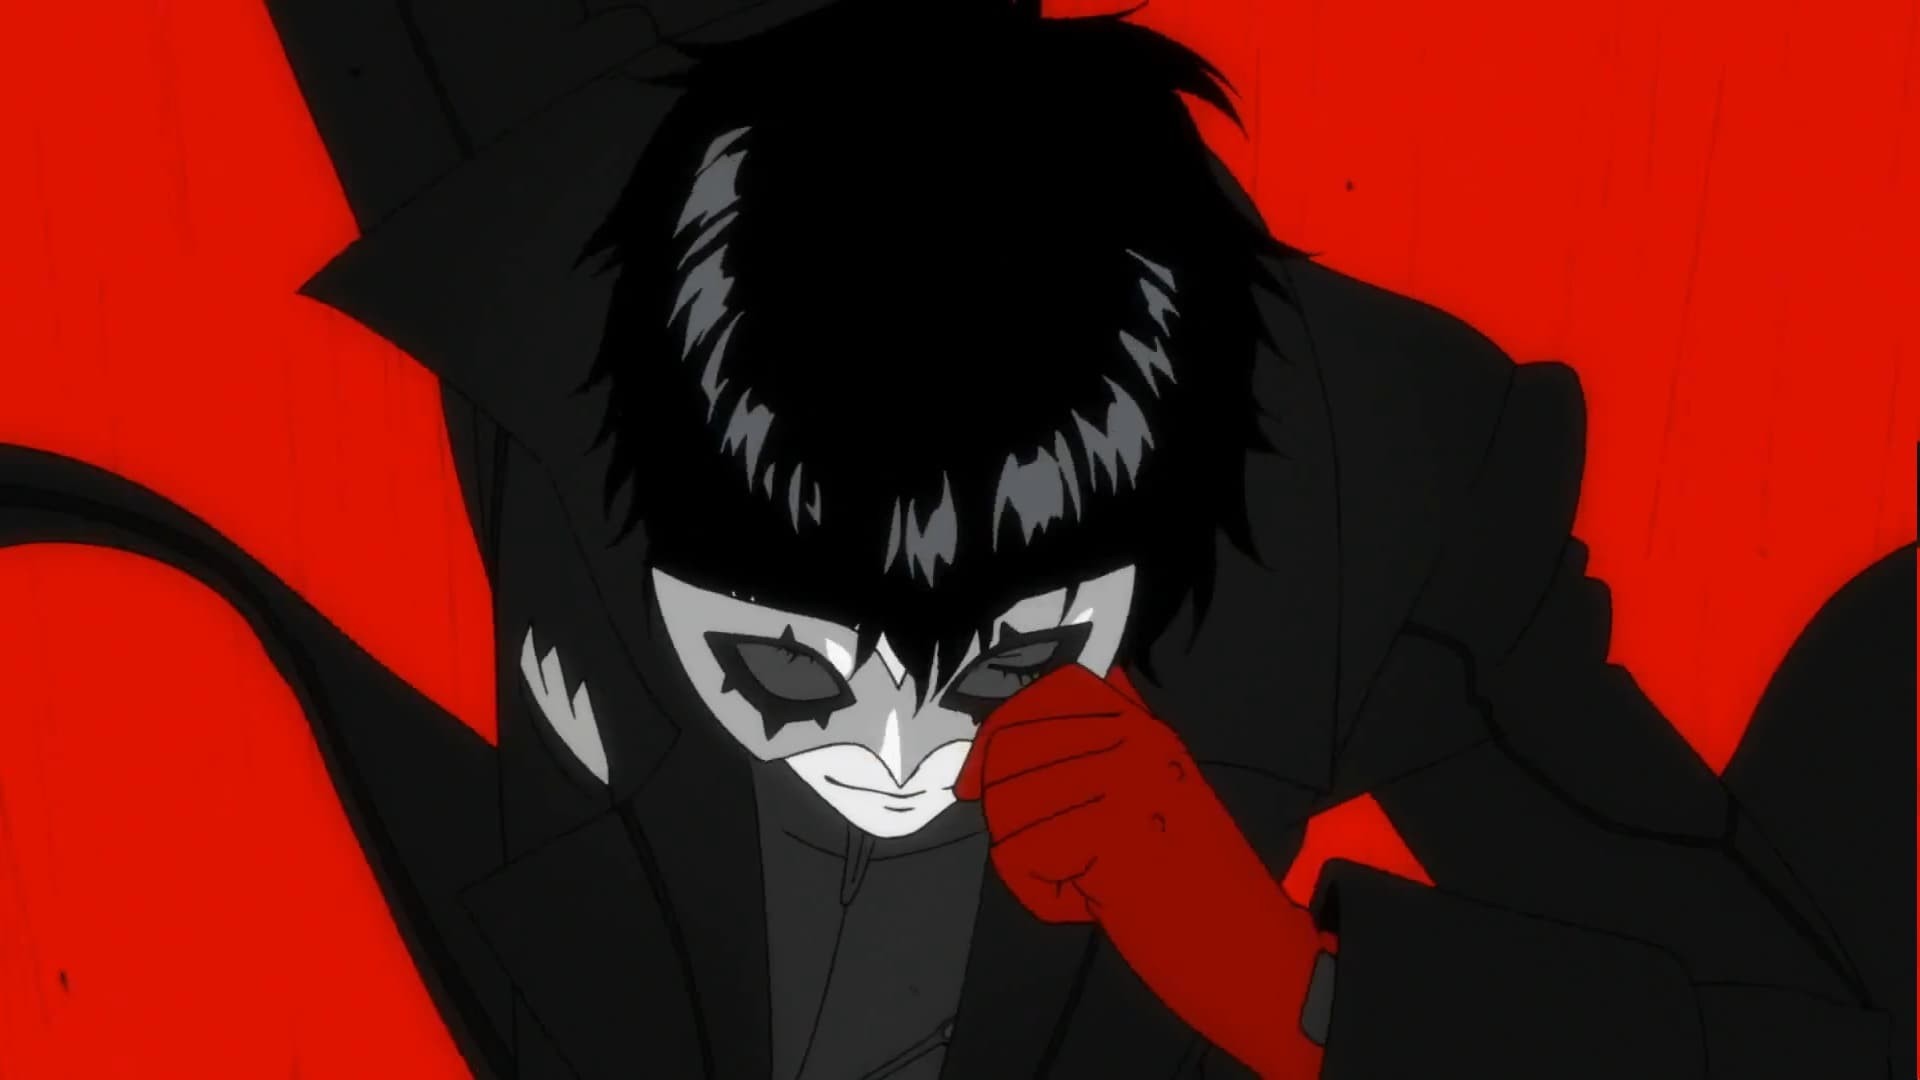 Persona 5 – Protagonist background